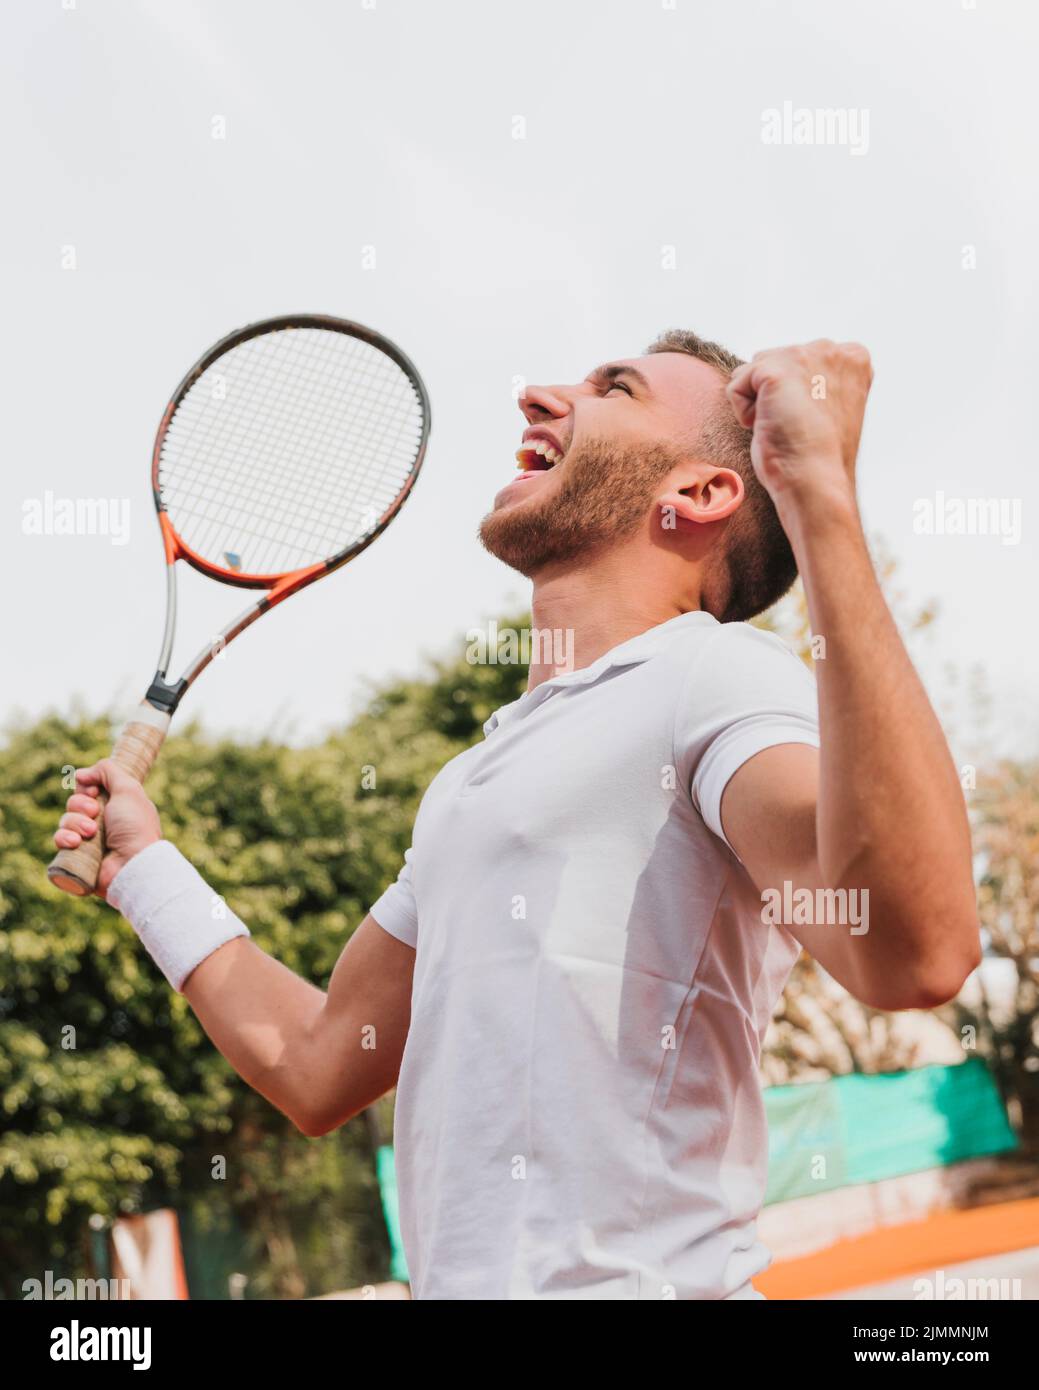 Jeune garçon sportif gagnant jeu de tennis Banque D'Images